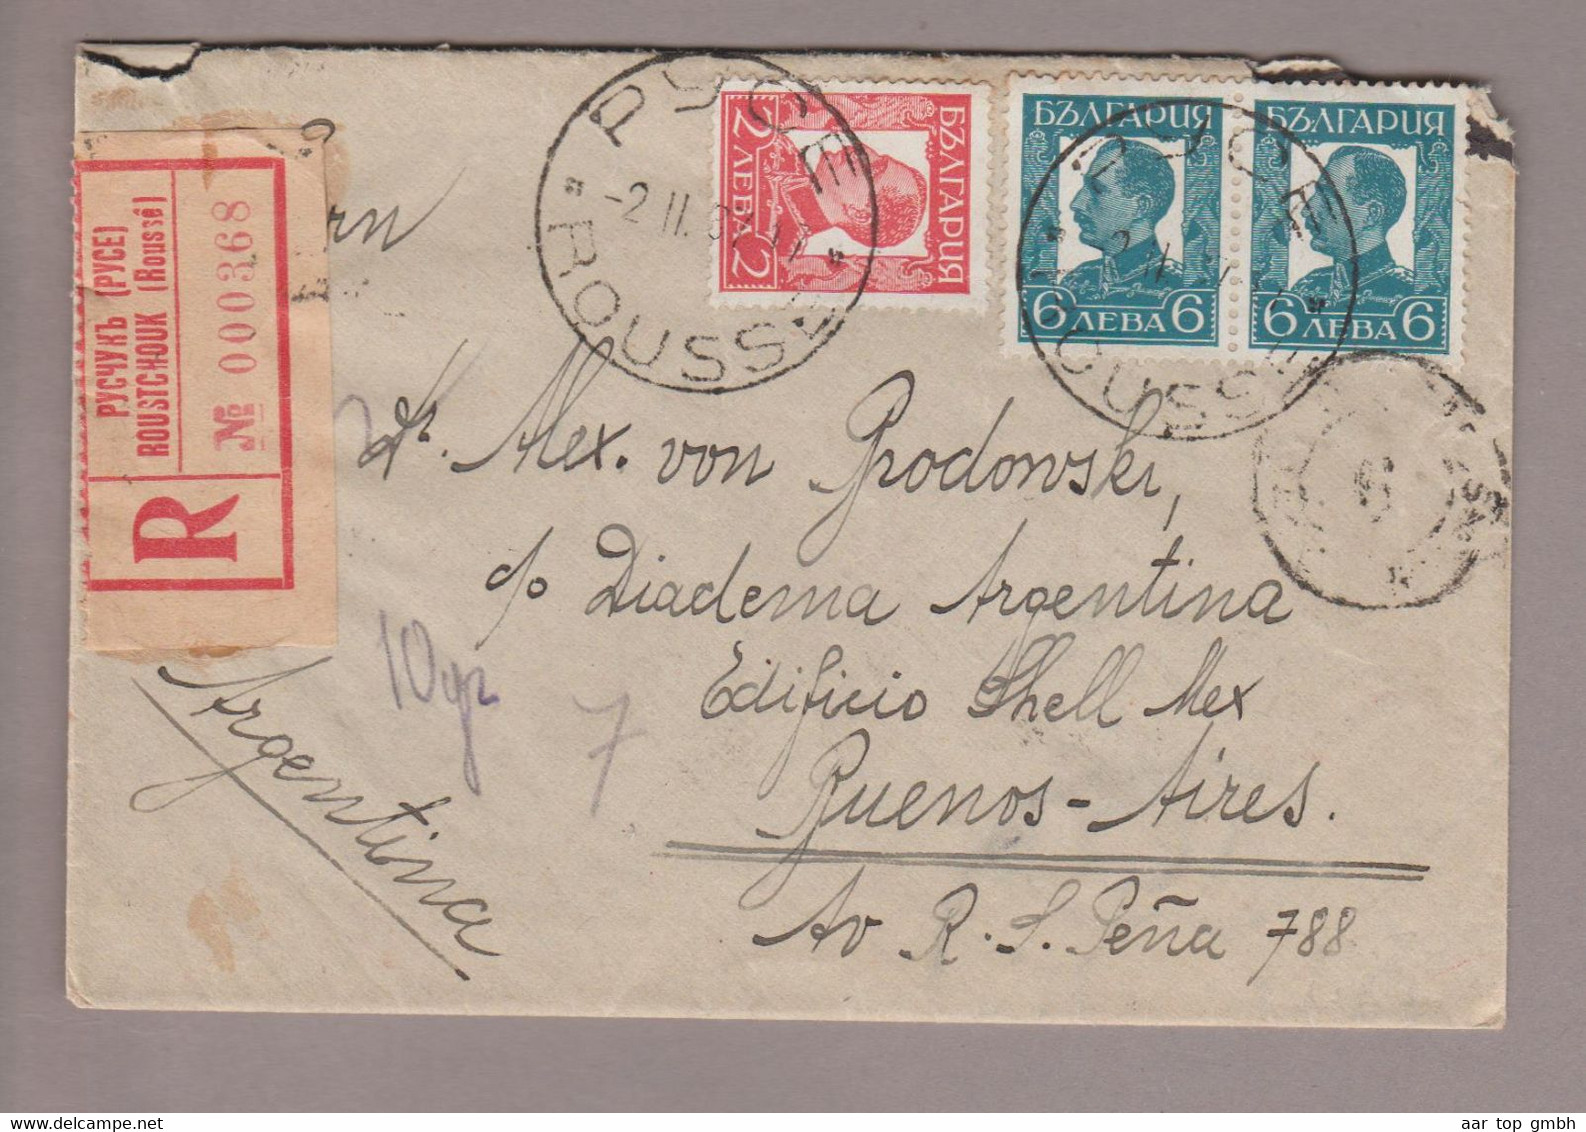 Bulgarien 1957-02-02 Pyce R-Brief Nach Buenos Aires - Lettres & Documents